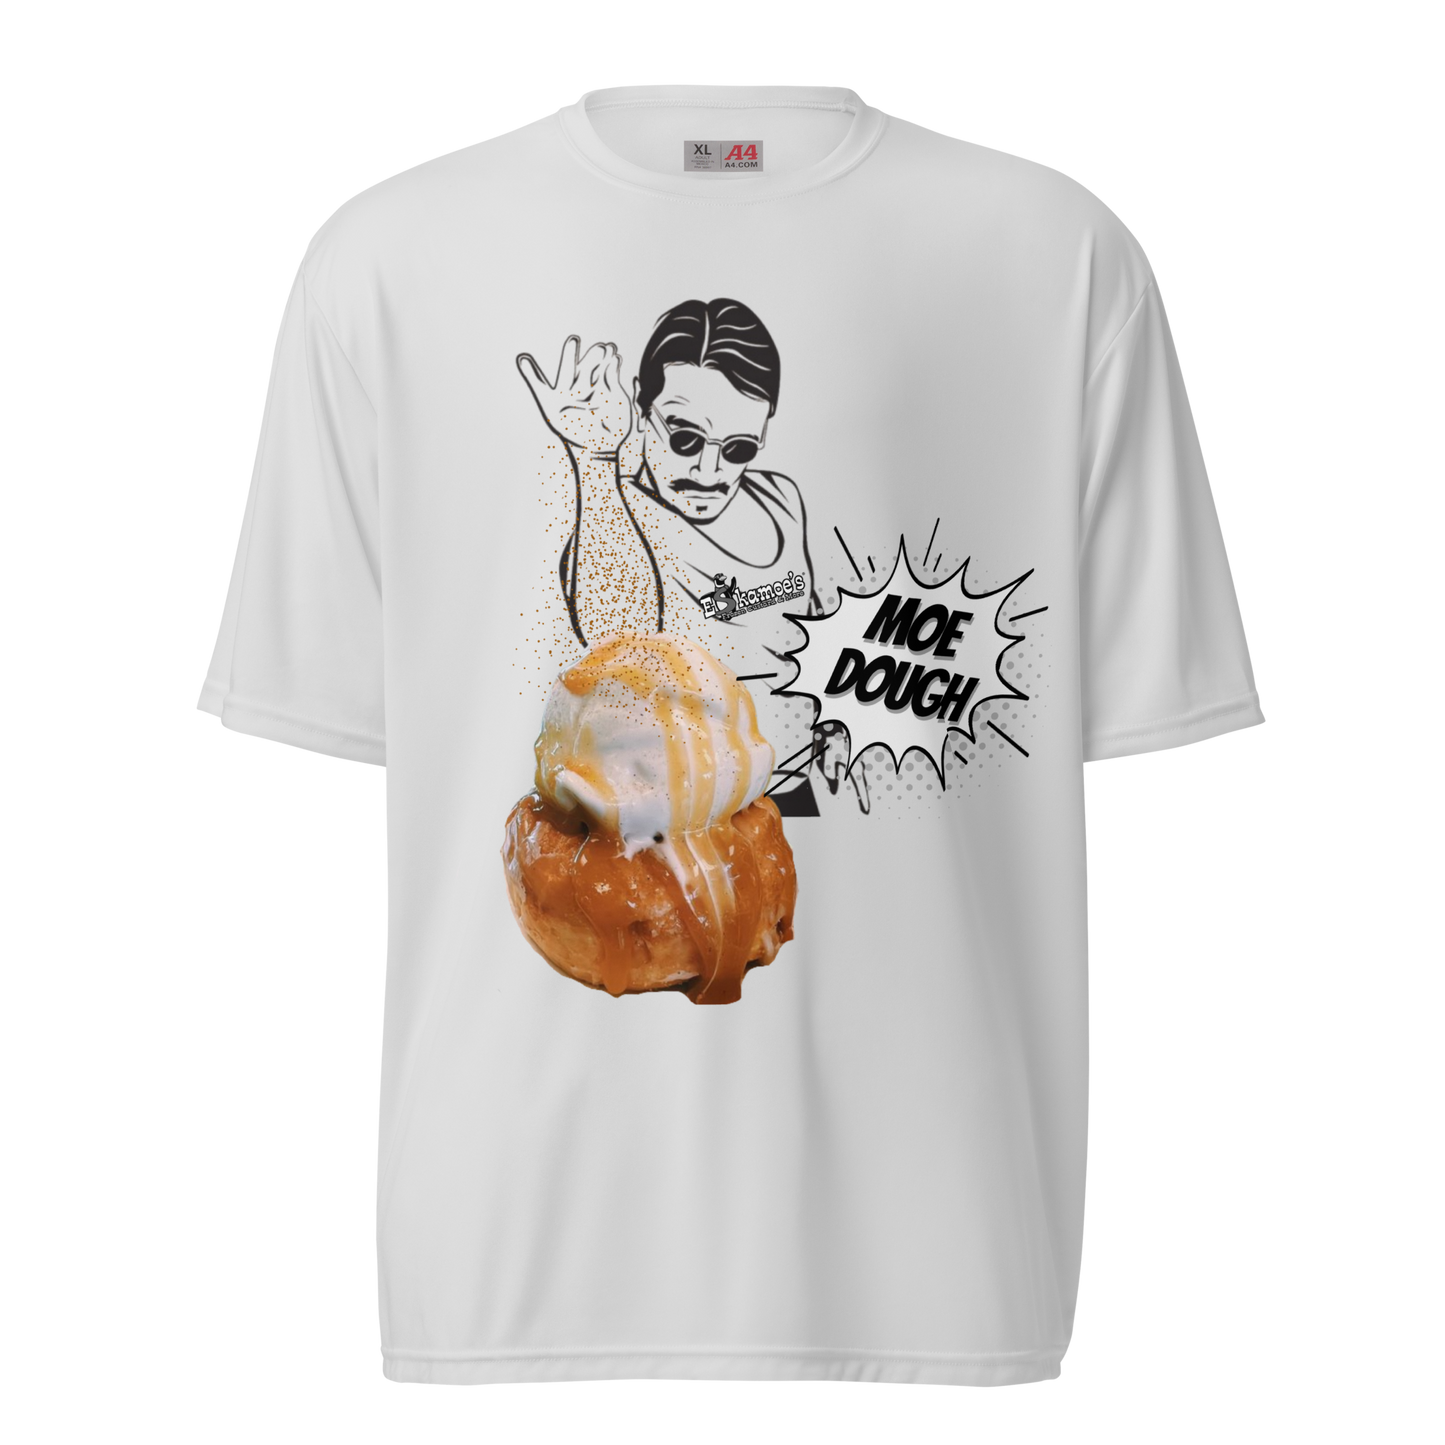 Moe Dough - Unisex performance crew neck t-shirt